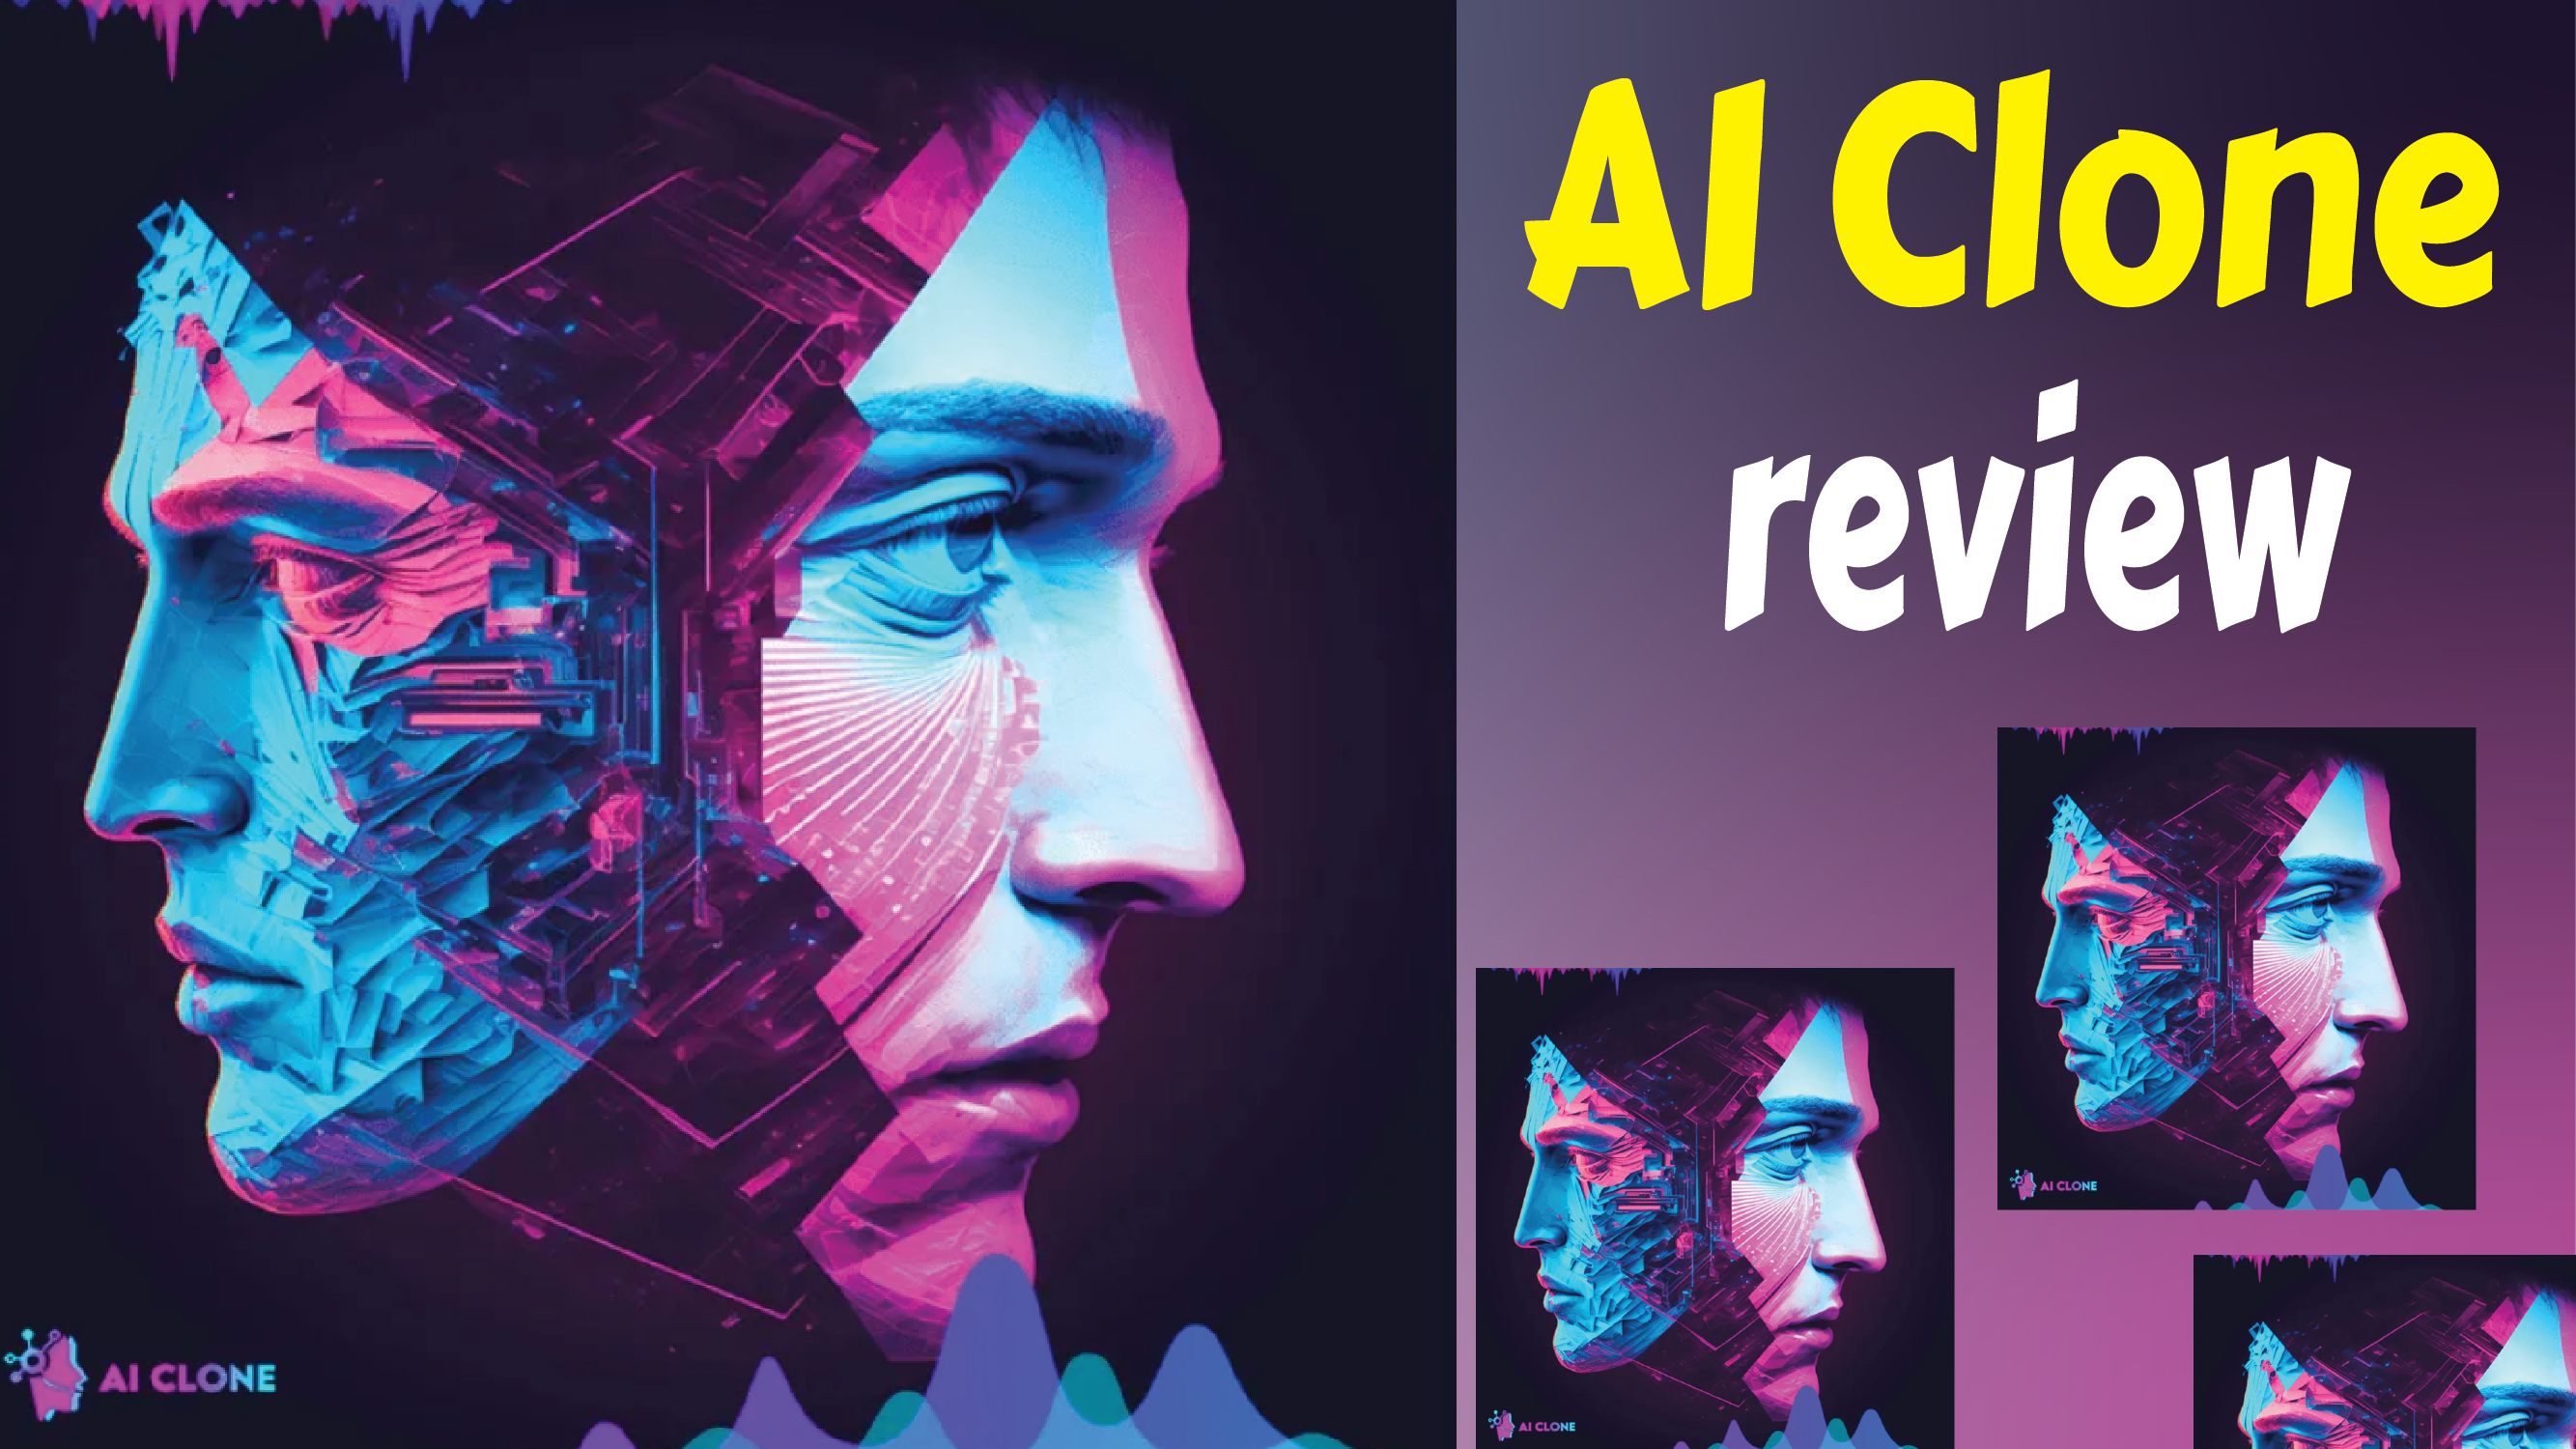 AI Clone review